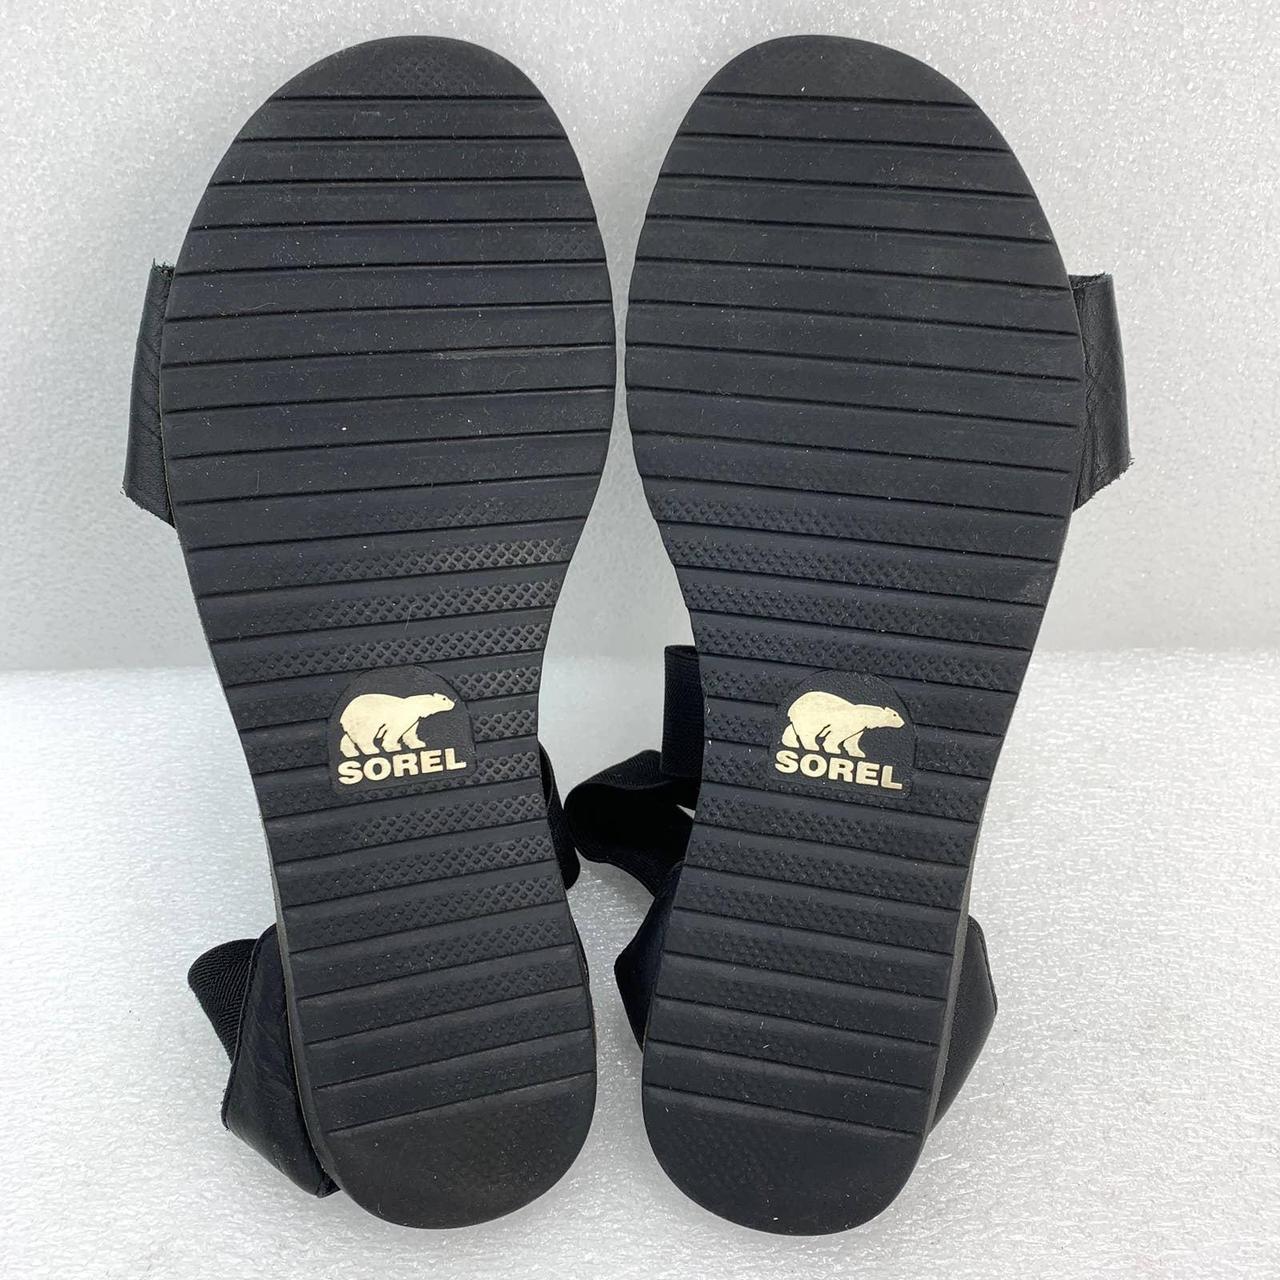 Sorel Women's Black and Tan Sandals (7)